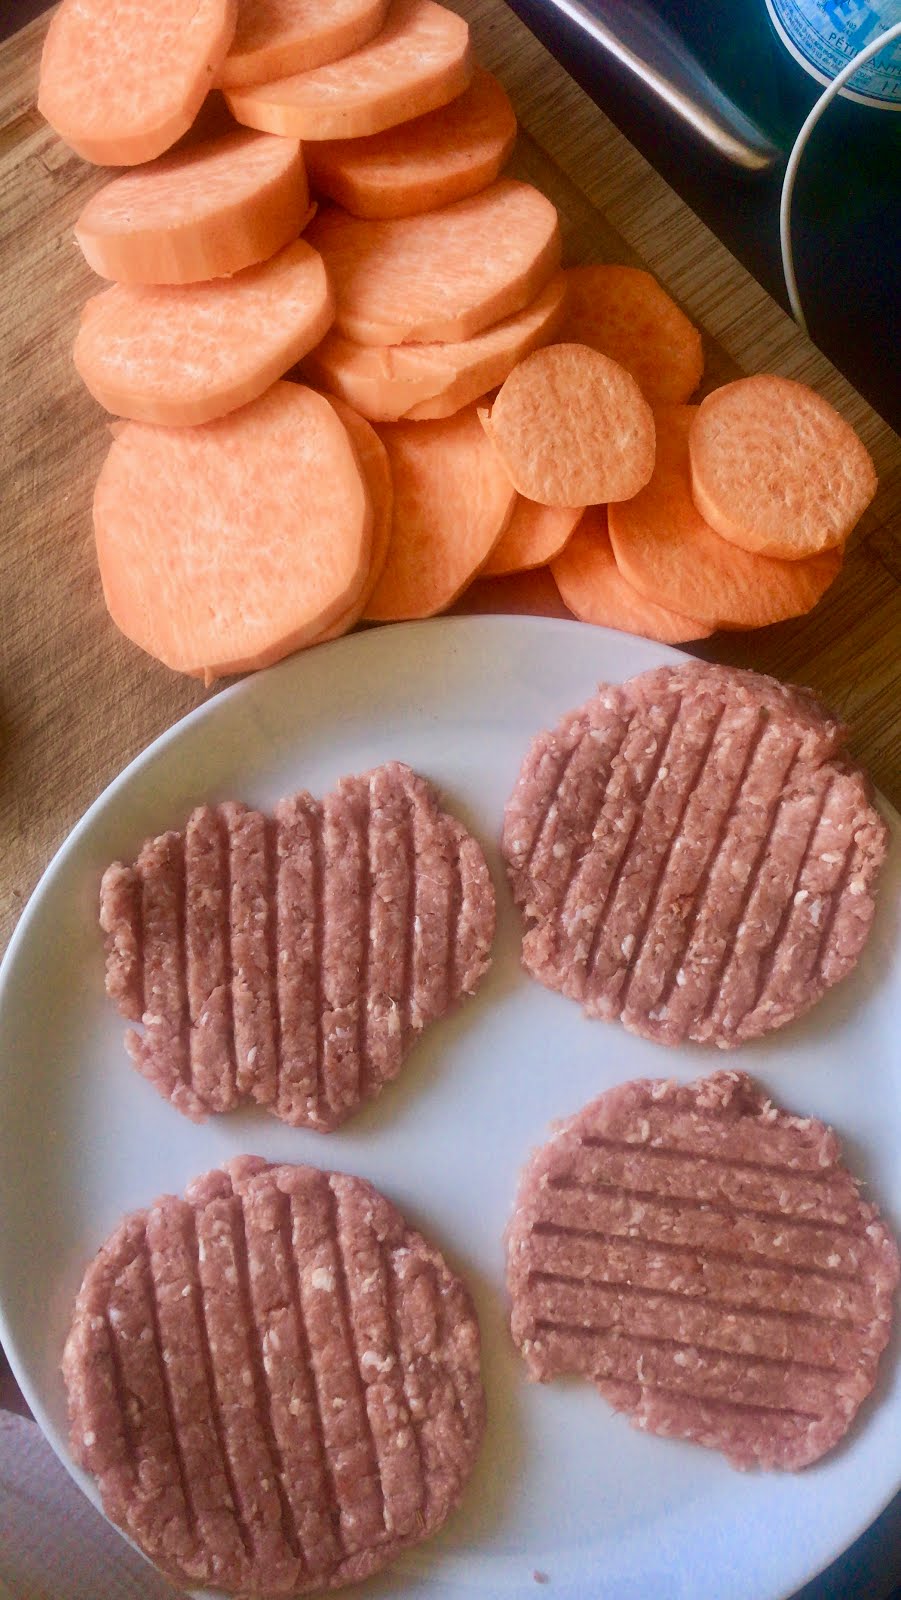 How to: Sweet potato hamburgers